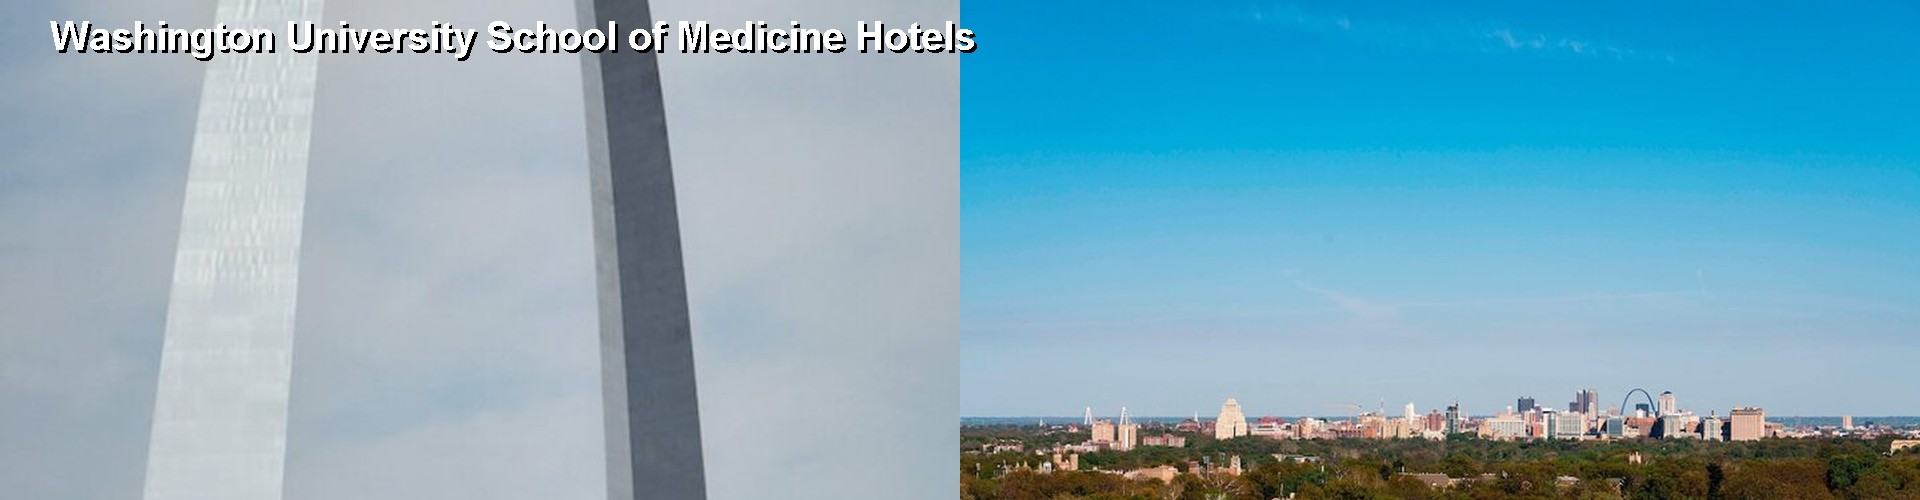 5 Best Hotels near Washington University School of Medicine